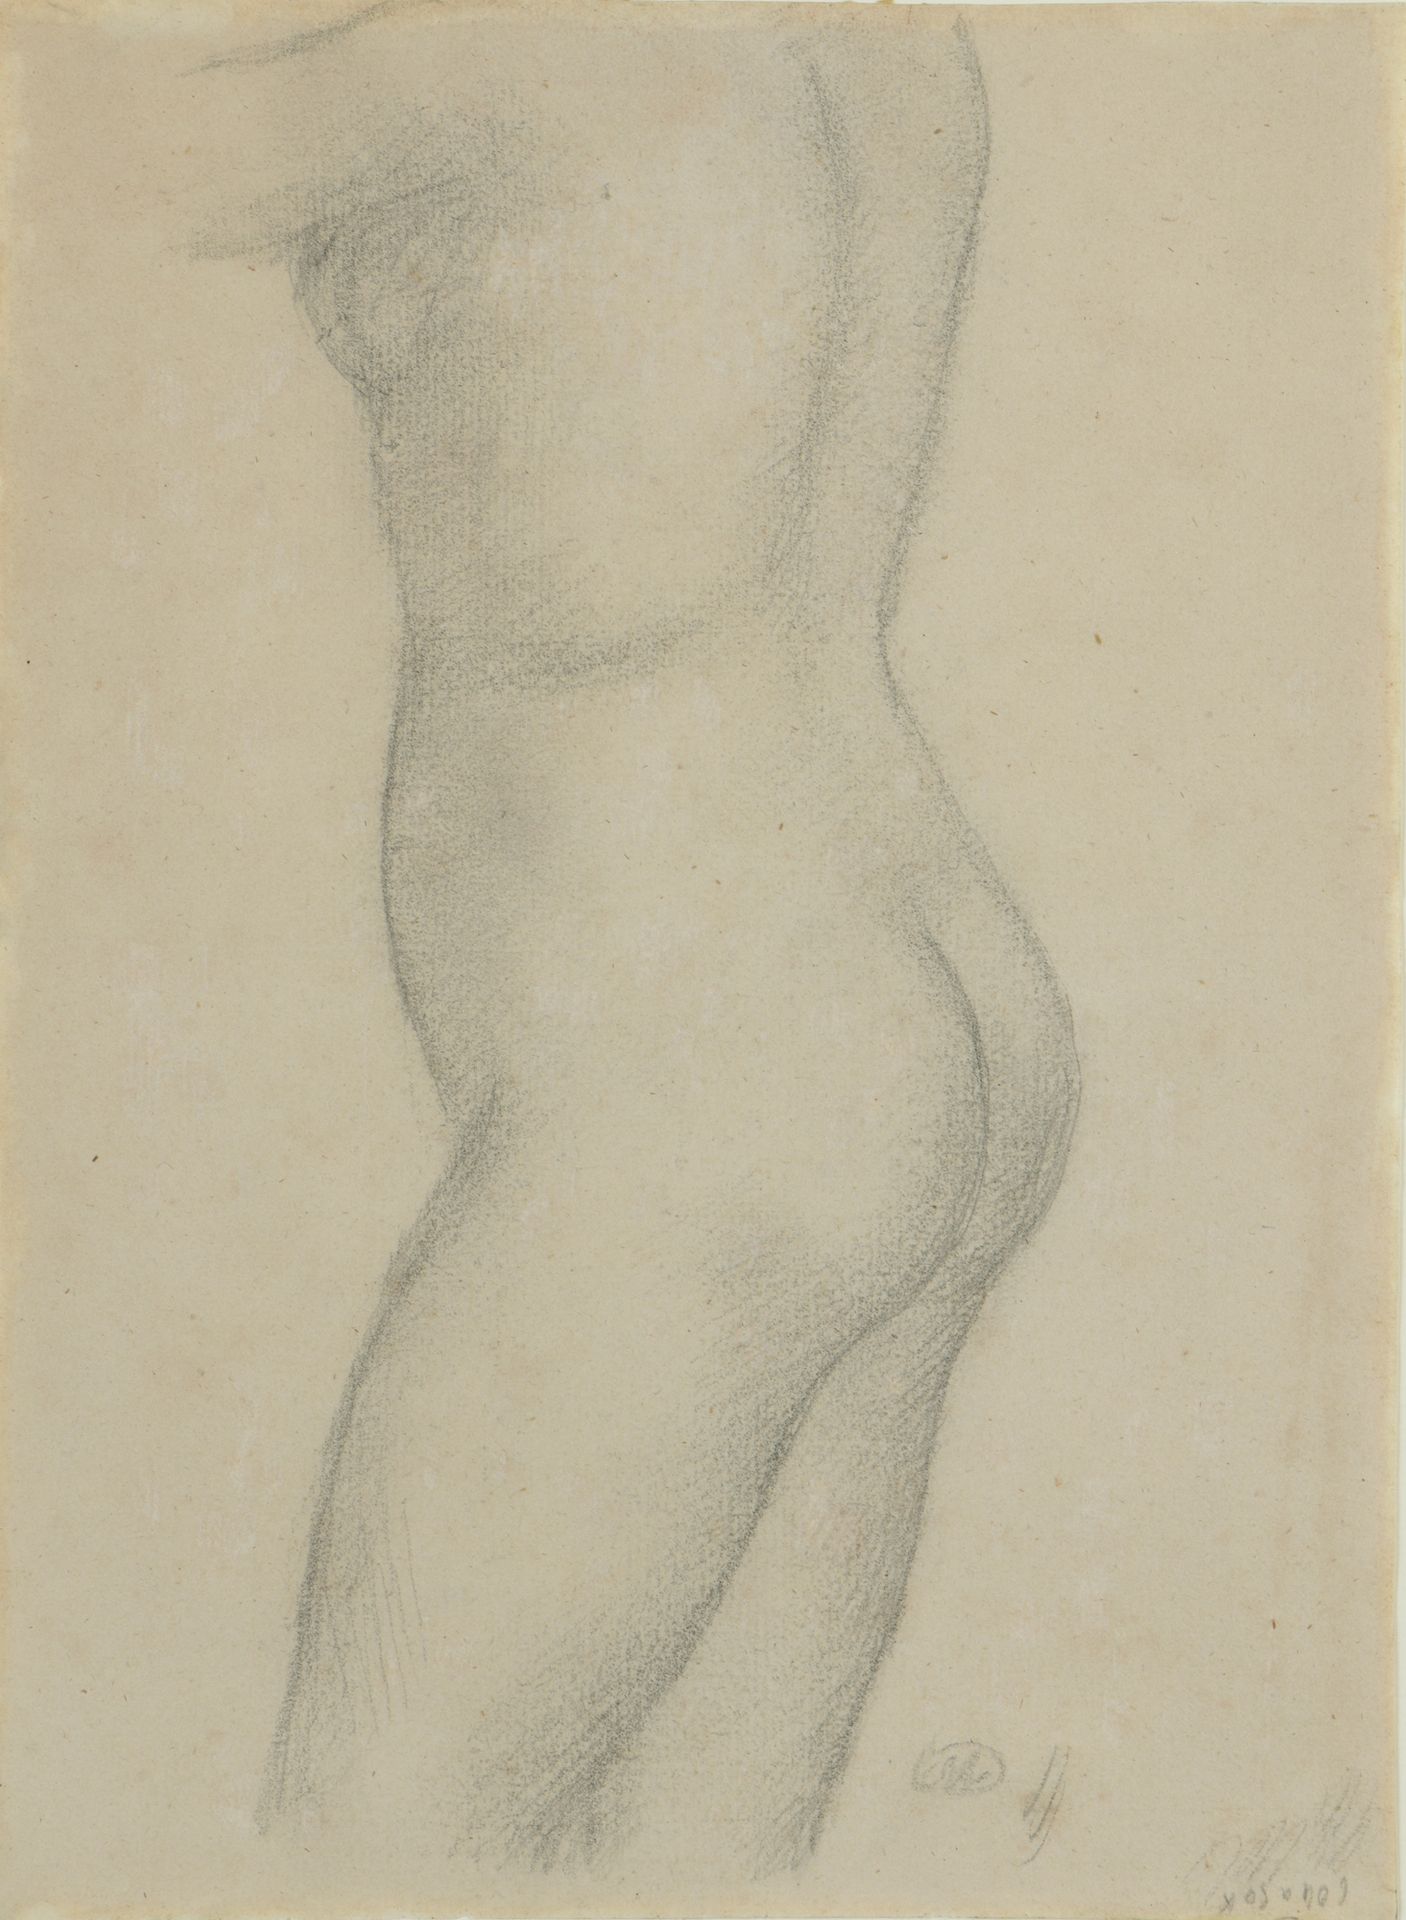 Null 阿里斯蒂德-马约尔(1861-1944)

女性裸体

黑色铅笔，模糊不清

有图案的无法辨认的铭文

31 x 22.5 cm



出处 :

巴&hellip;